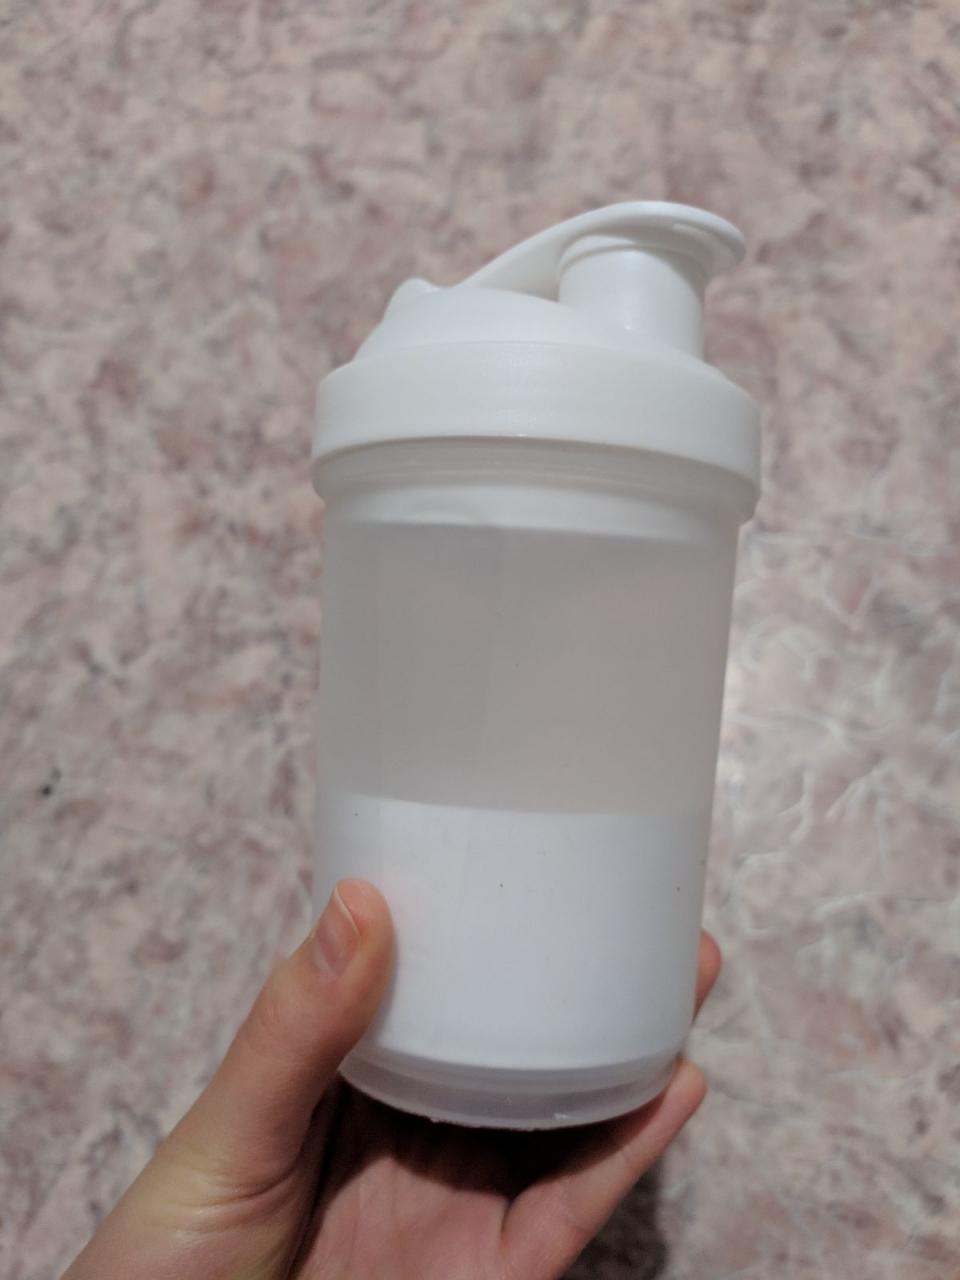 Отзыв на товар: Шейкер спортивный с чашей под протеин, цвет белый, 500 мл. NNB. Вид 1 от 28.12.2021 